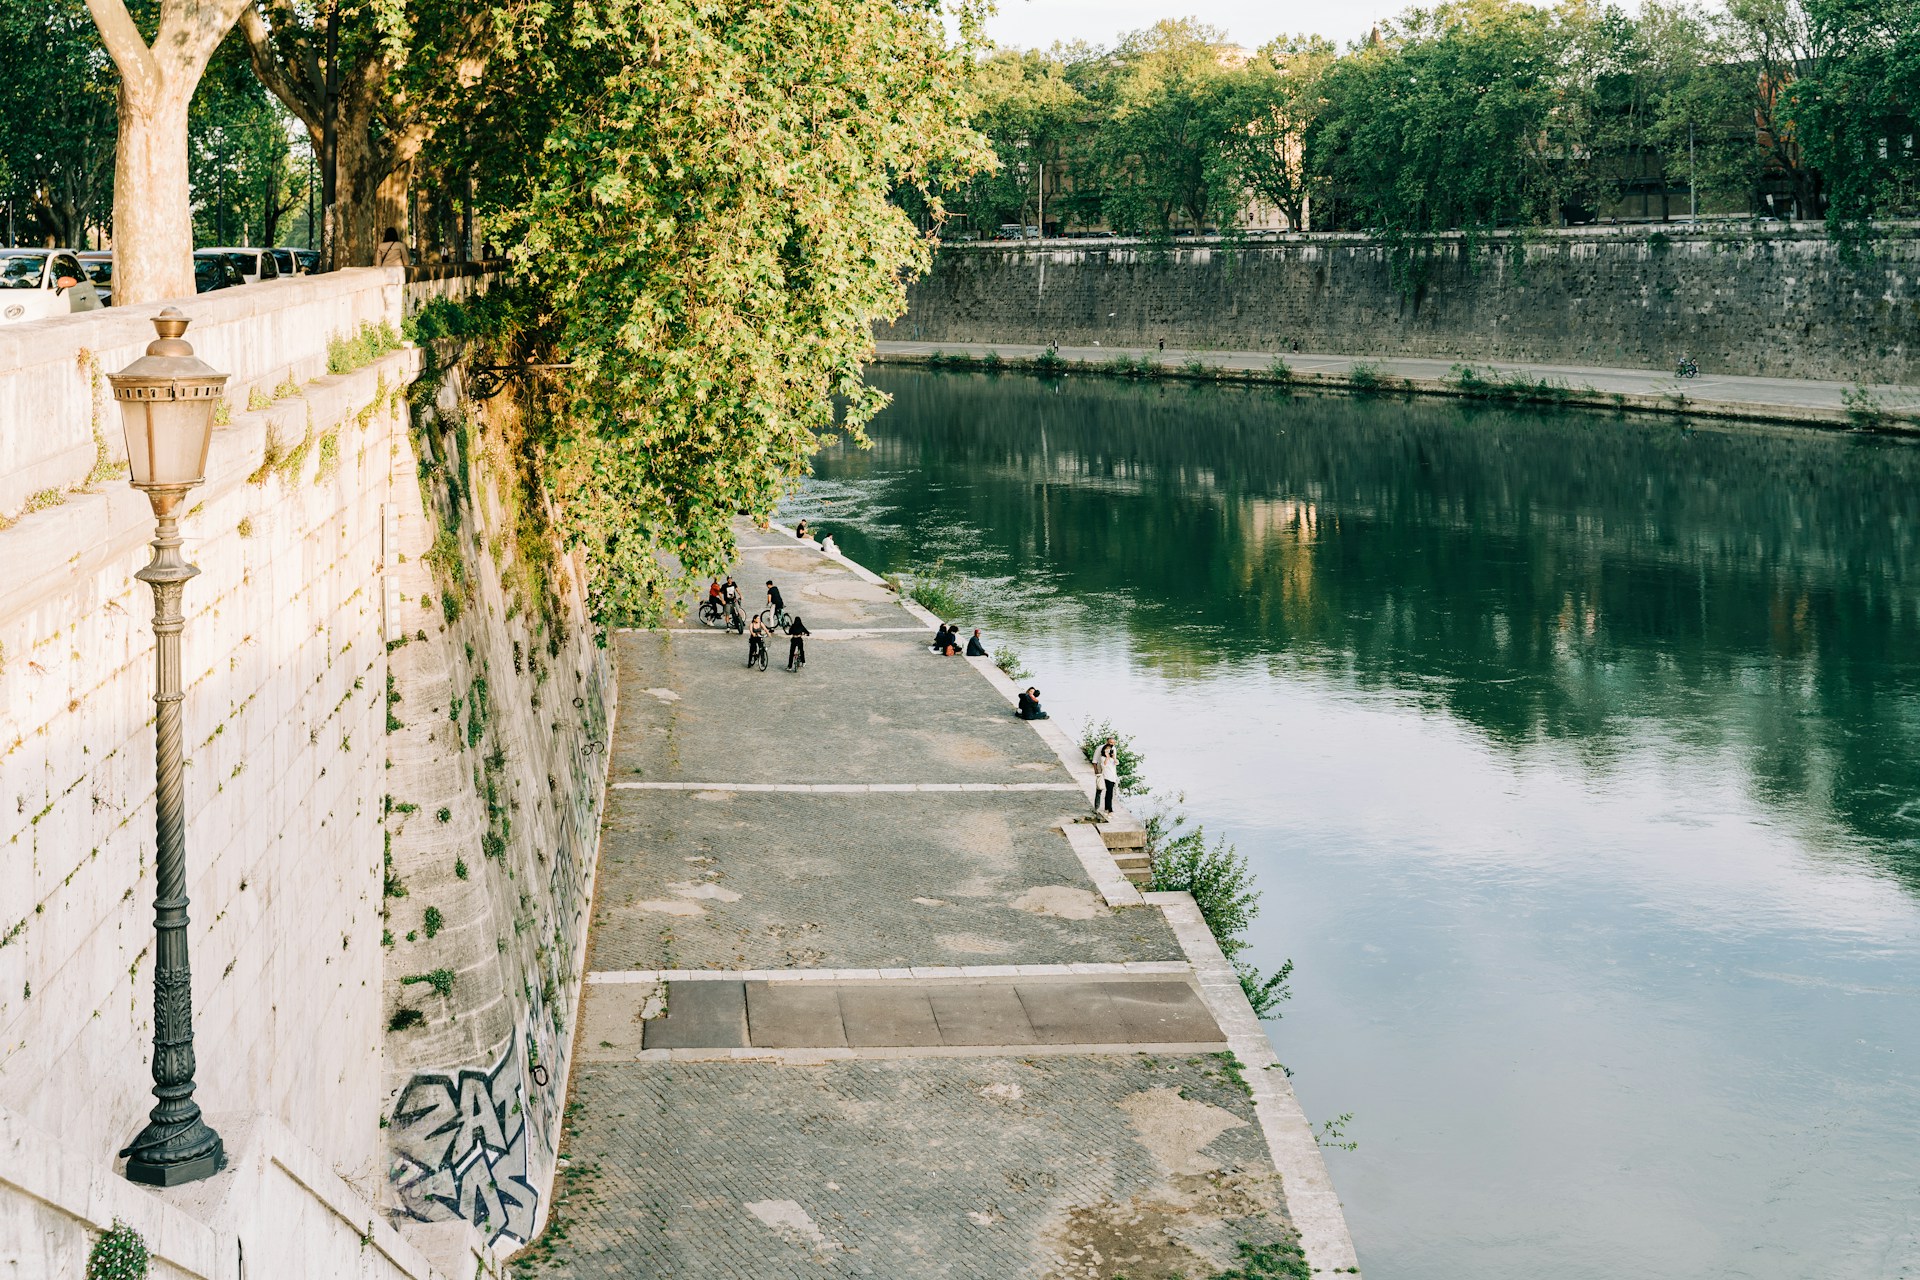 People walking and biking along the Tiber River in Rome (photo: Gabriella Clare Marino).